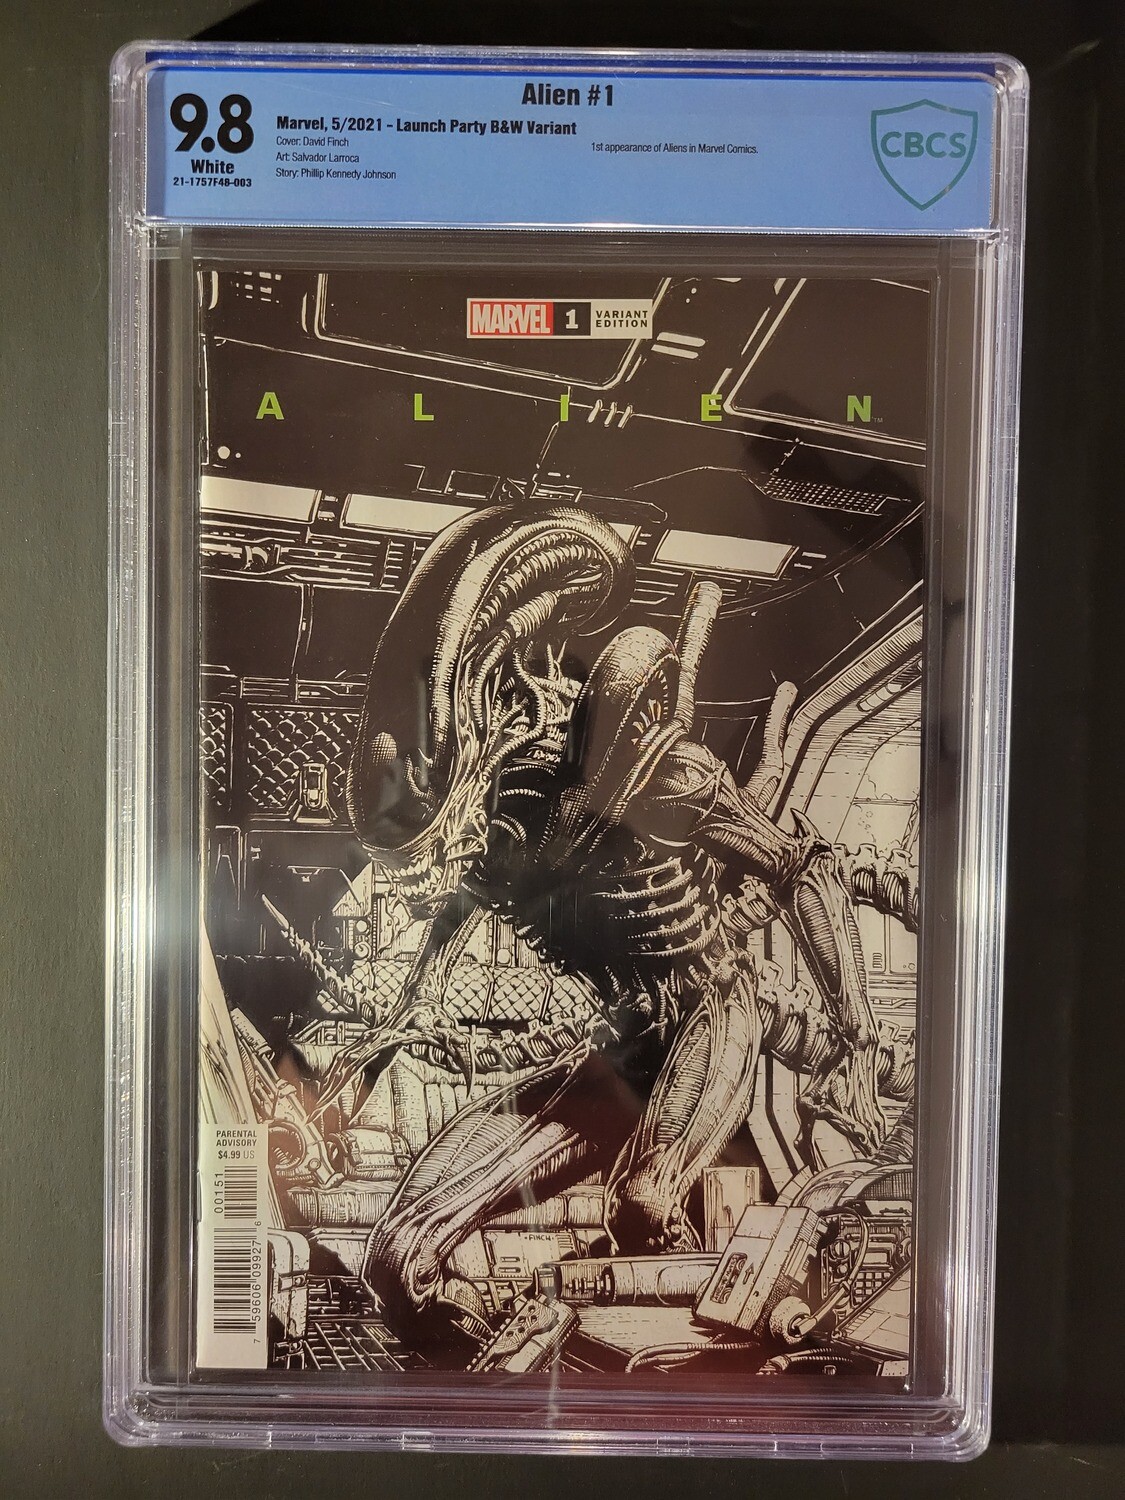 Alien #1 CBCS 9.8 One Per Store 1st appearance of Aliens in Marvel Comics